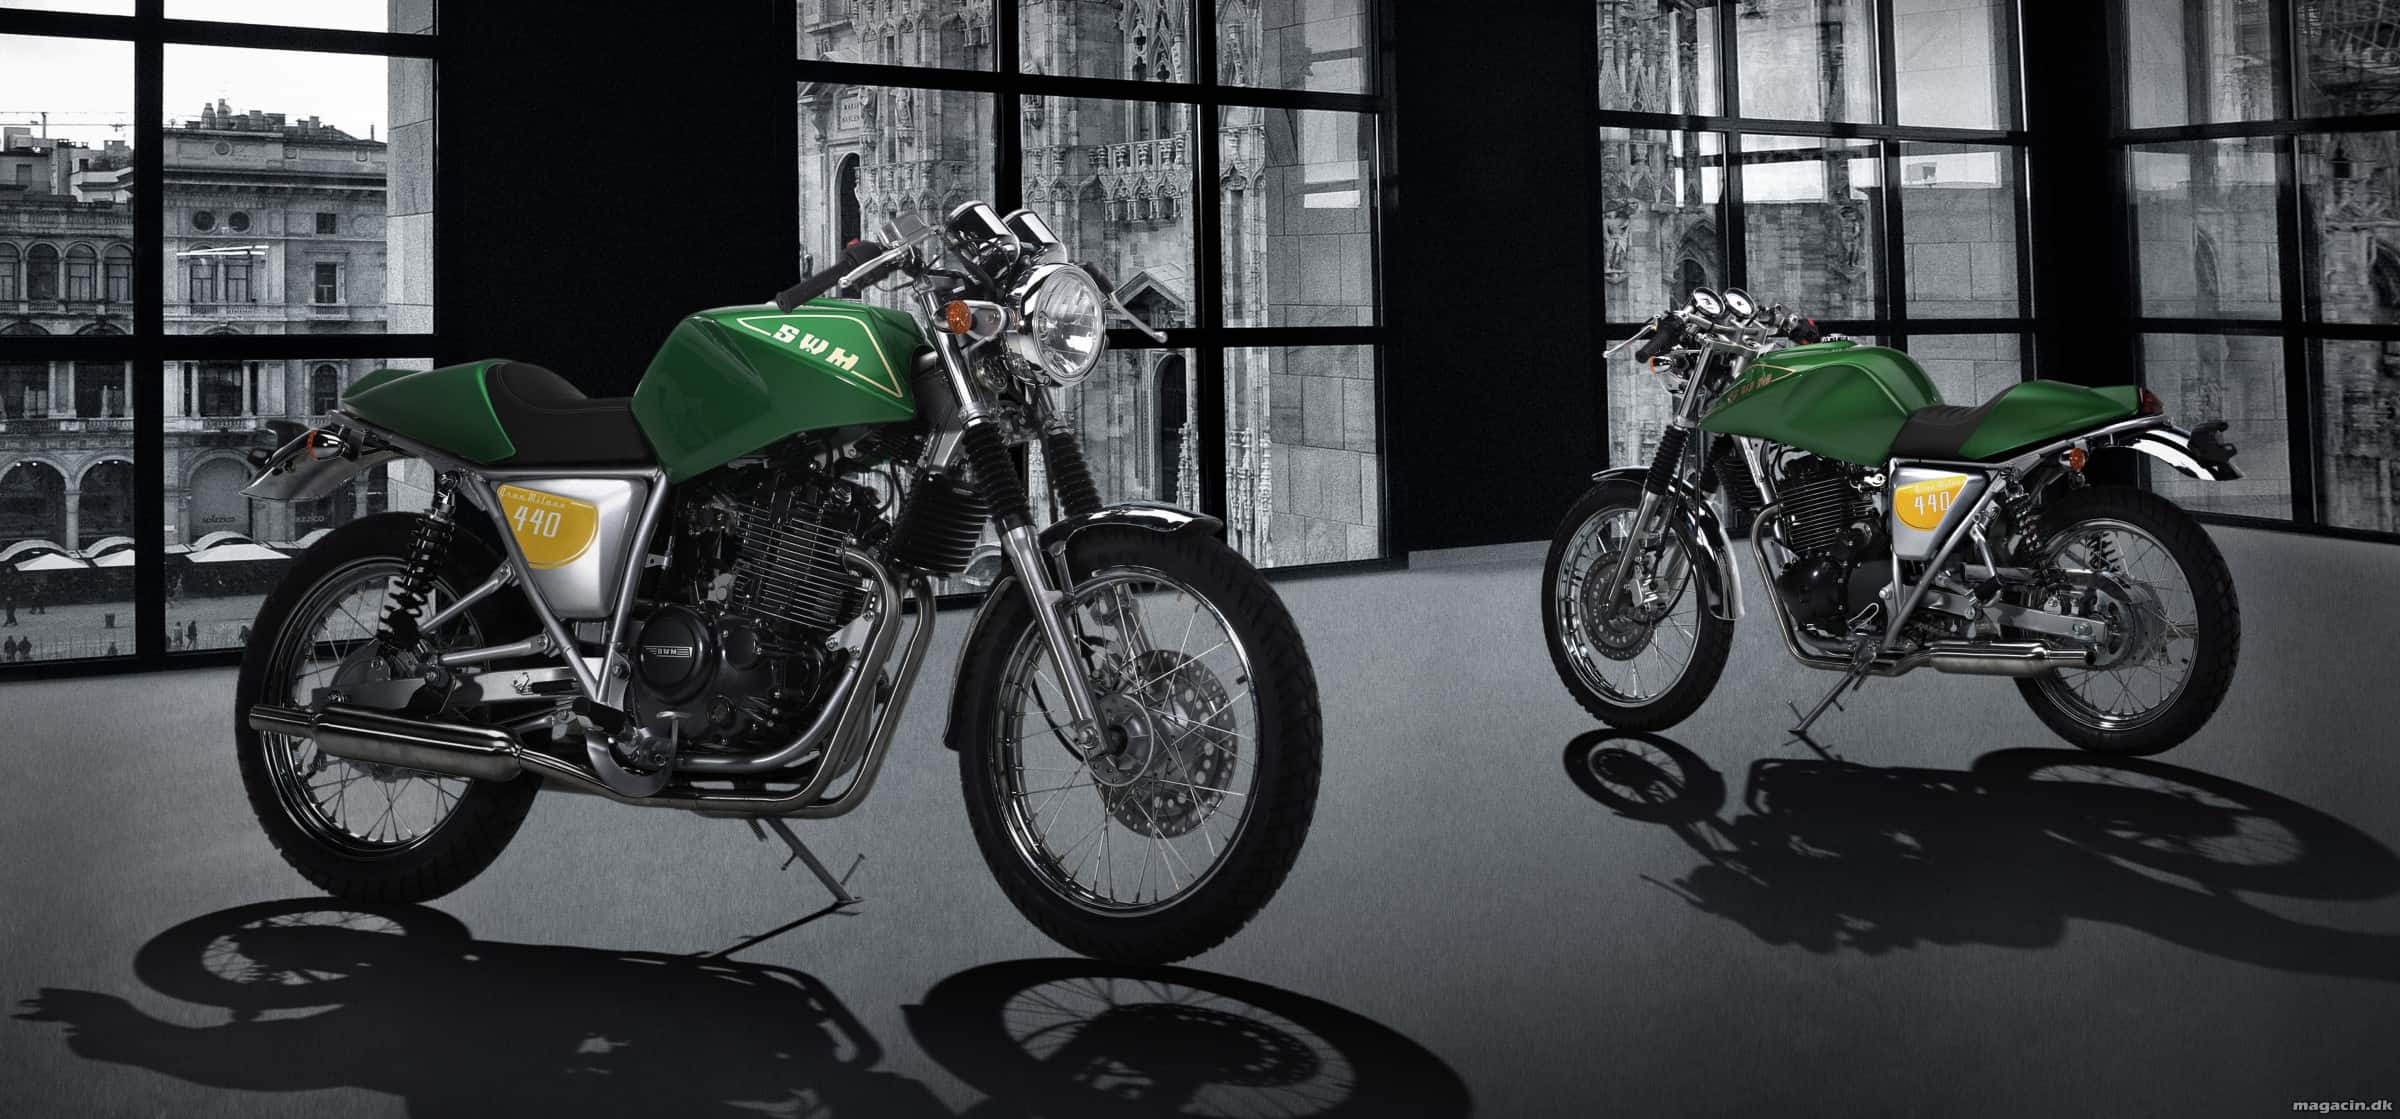 Nyt motorcykelmærke i Danmark